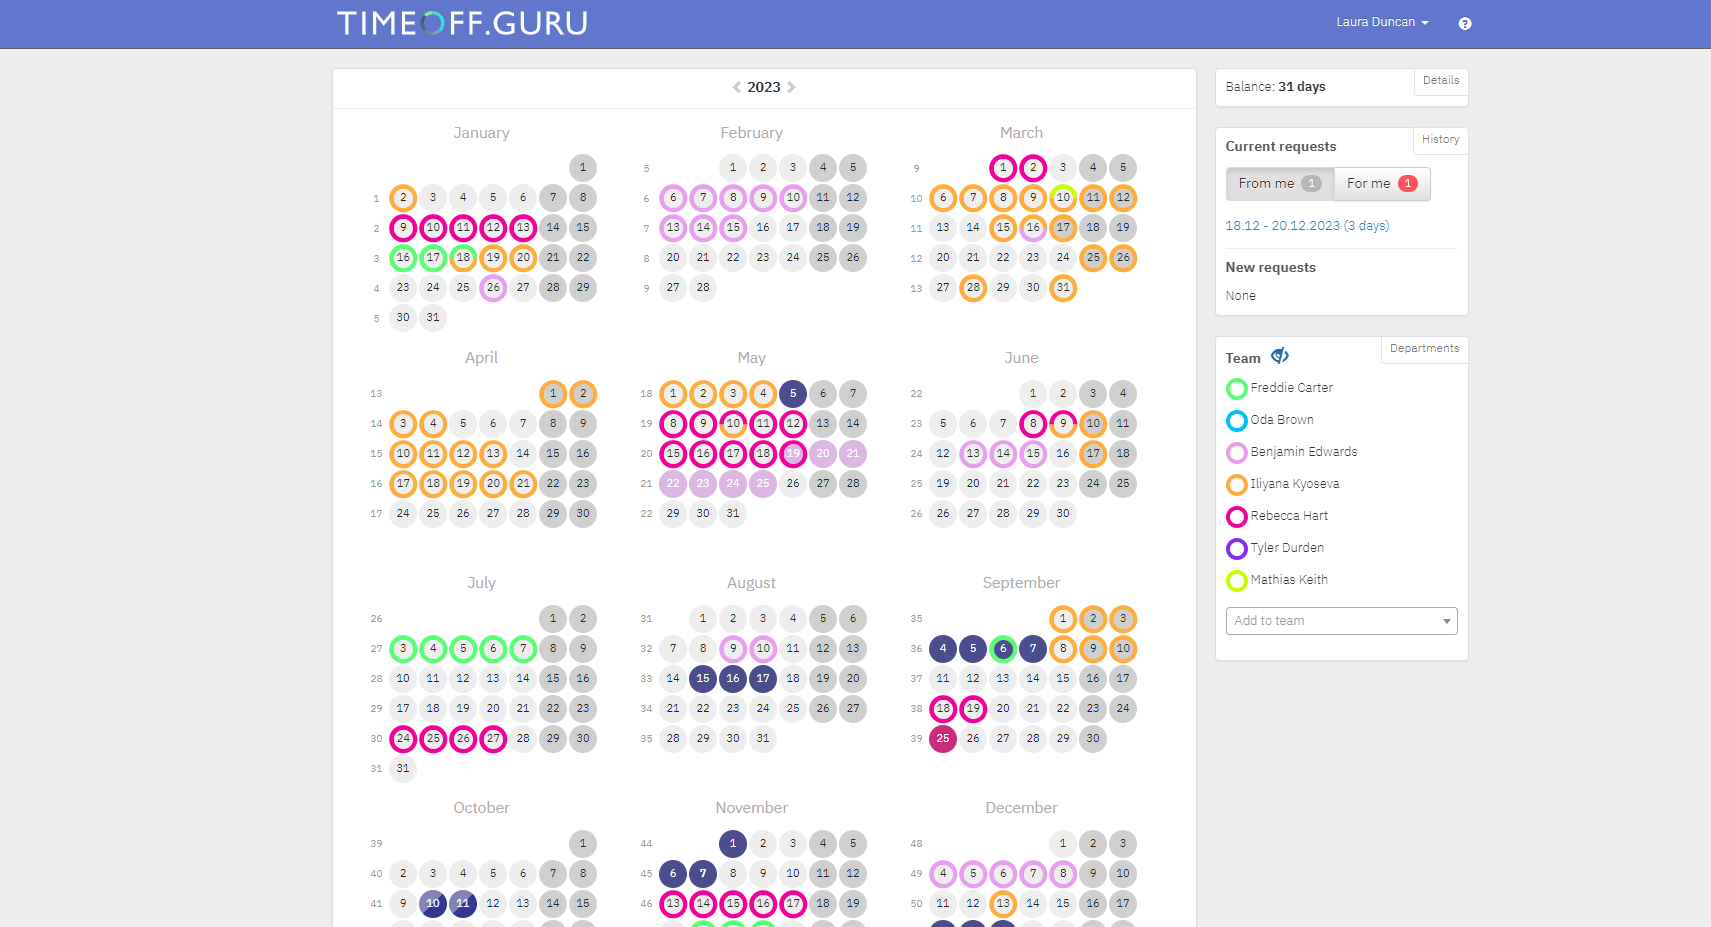 TIMEOFF.GURU main screen with calendar view